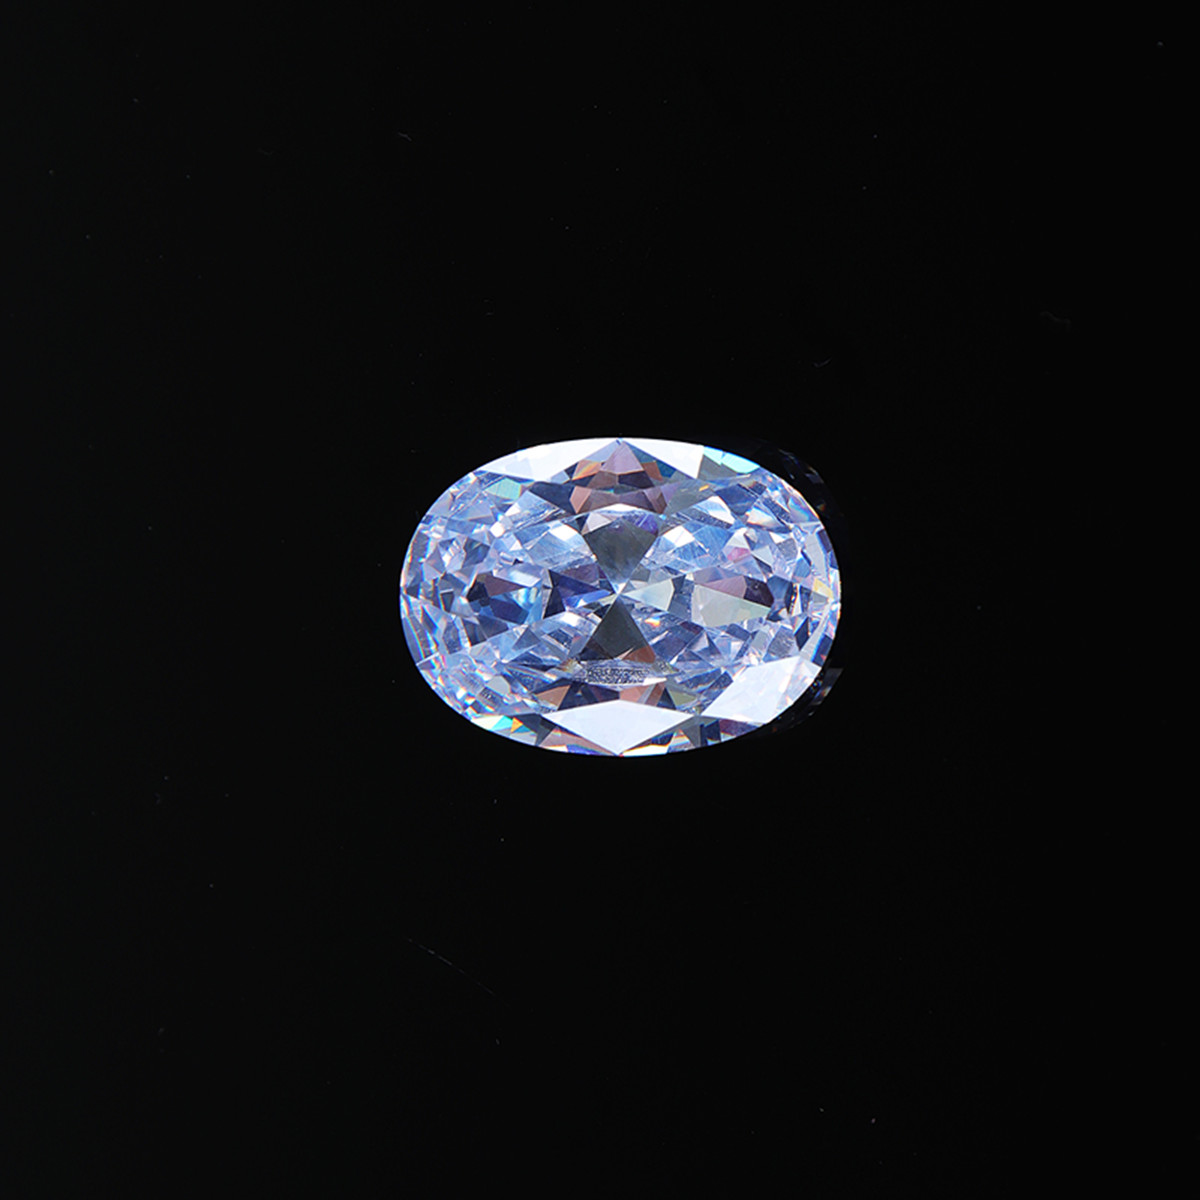 1825mm-White-Zircon-Sapphire-Diamond-Oval-Cut-Loose-Gemstones-AAA-Craft-Decorations-1391925